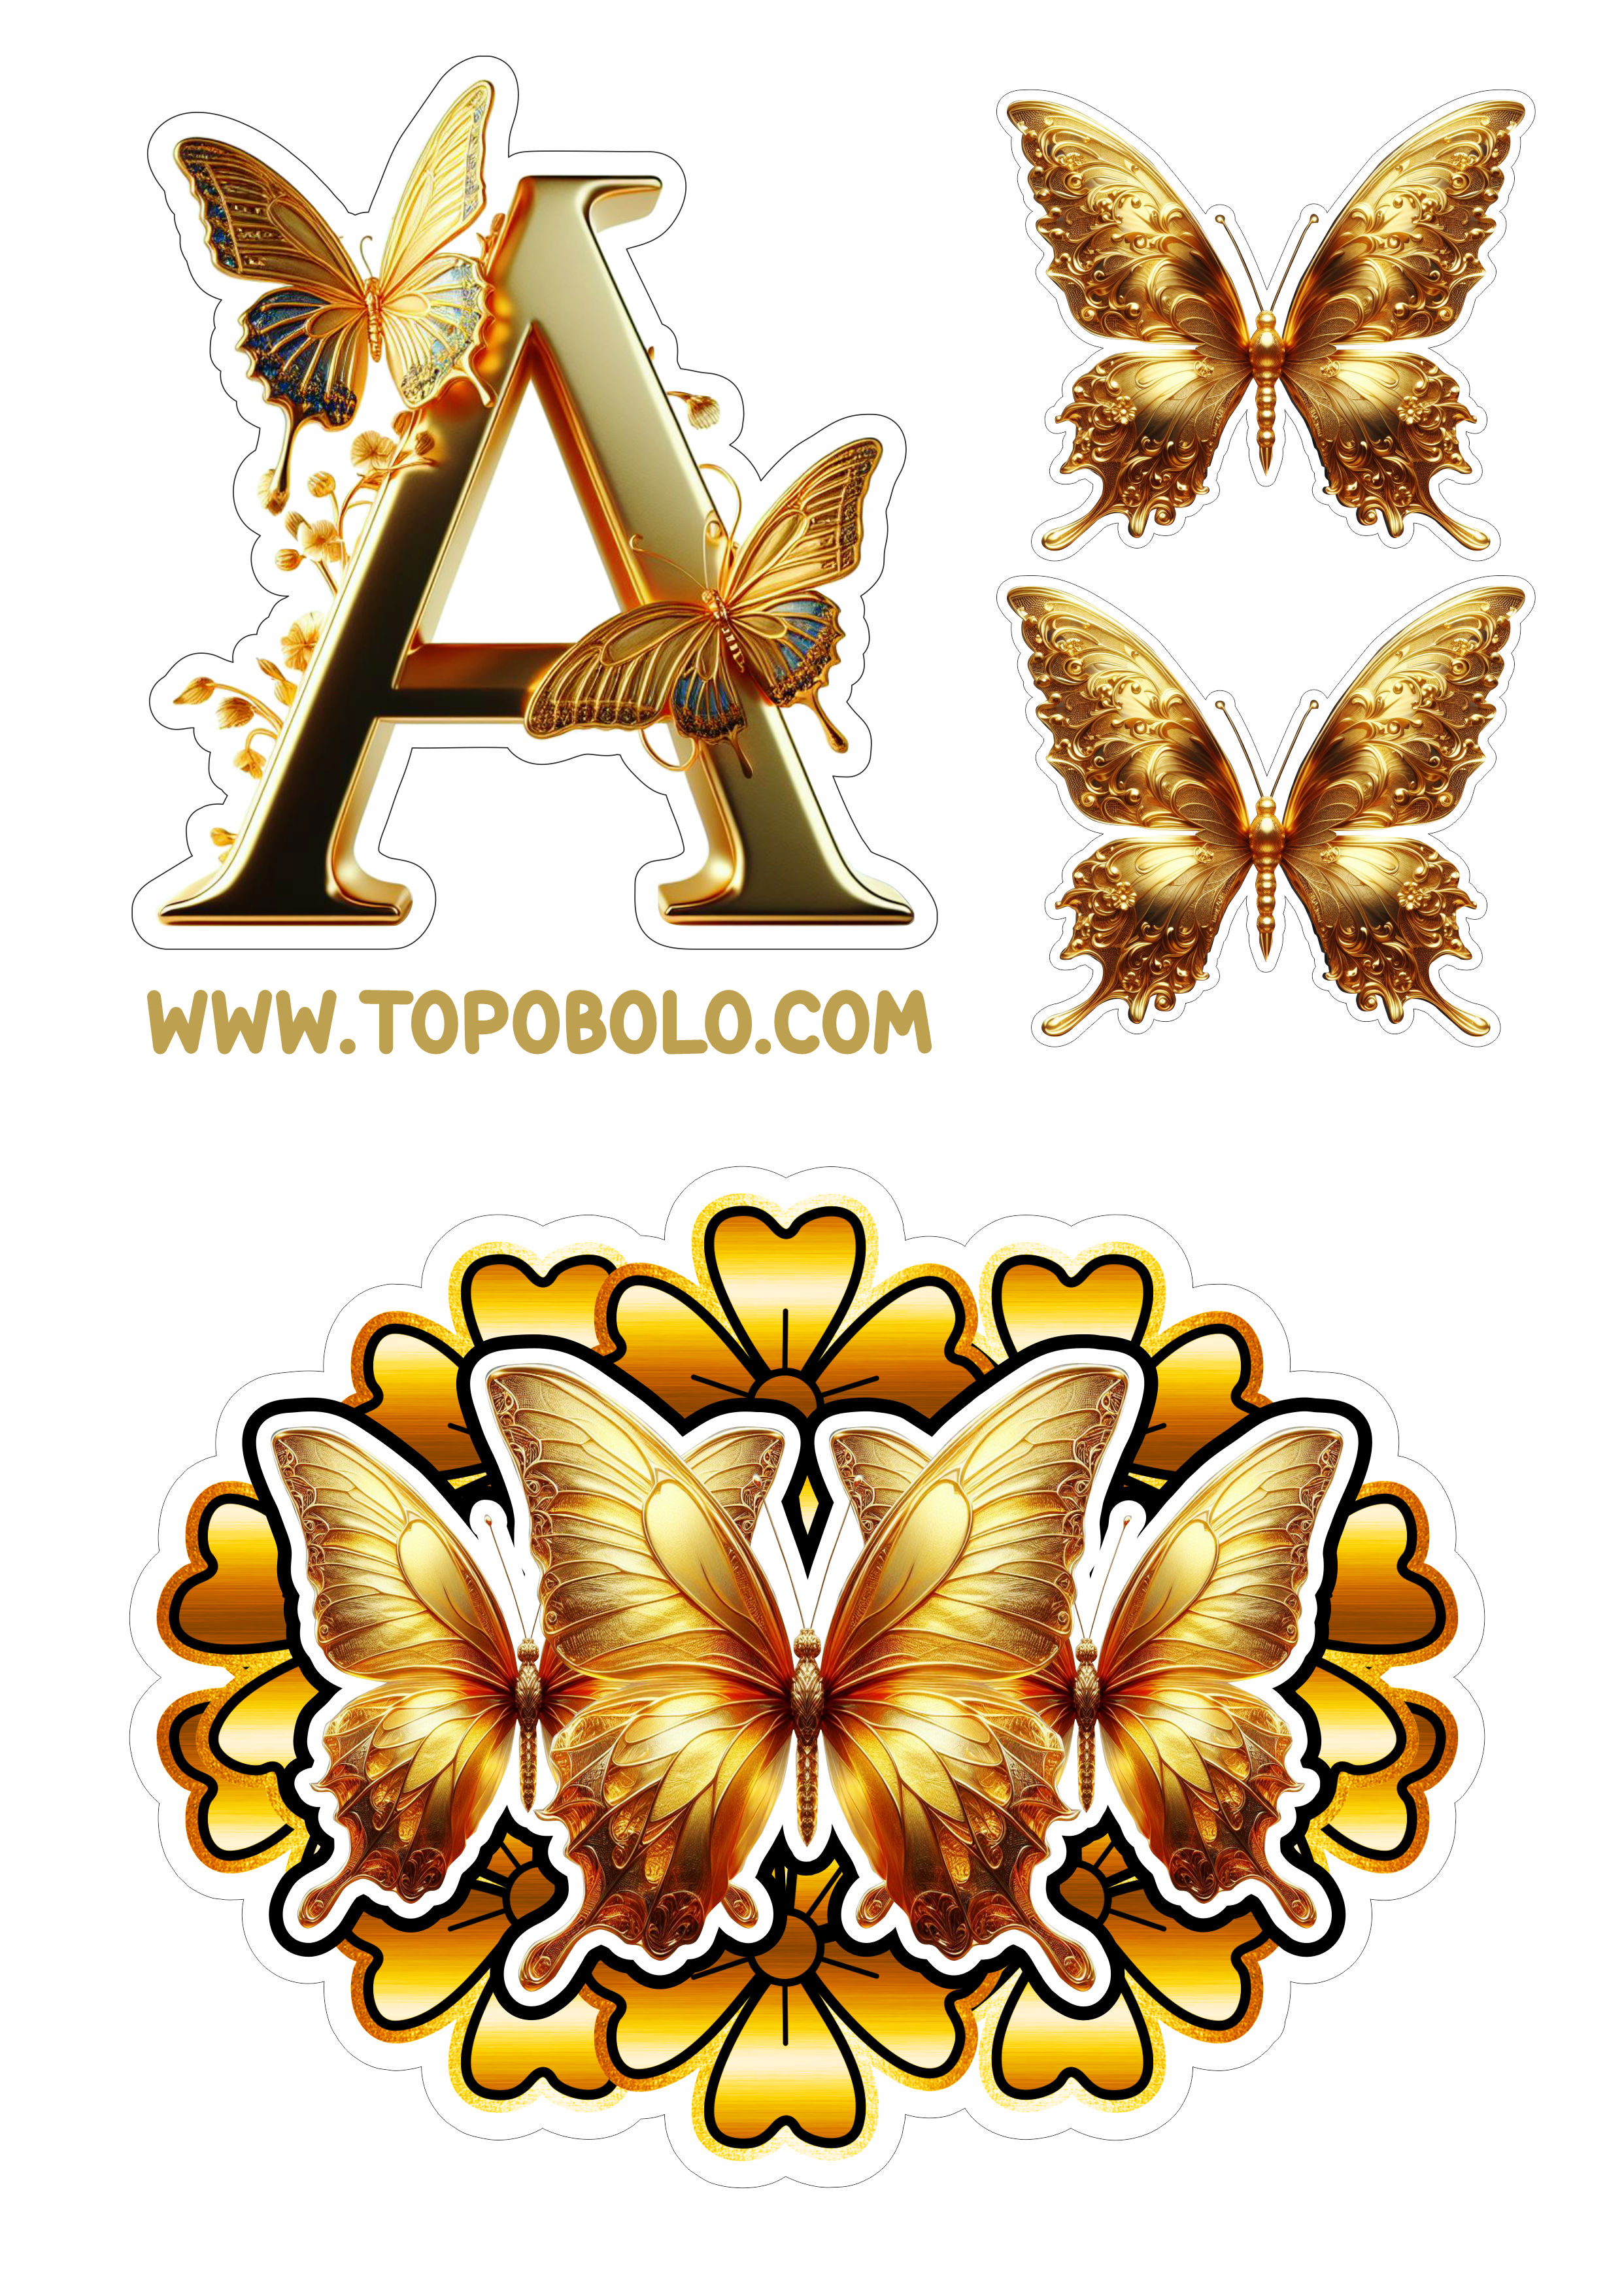 Topo de bolo letras douradas com borboletas e flores png